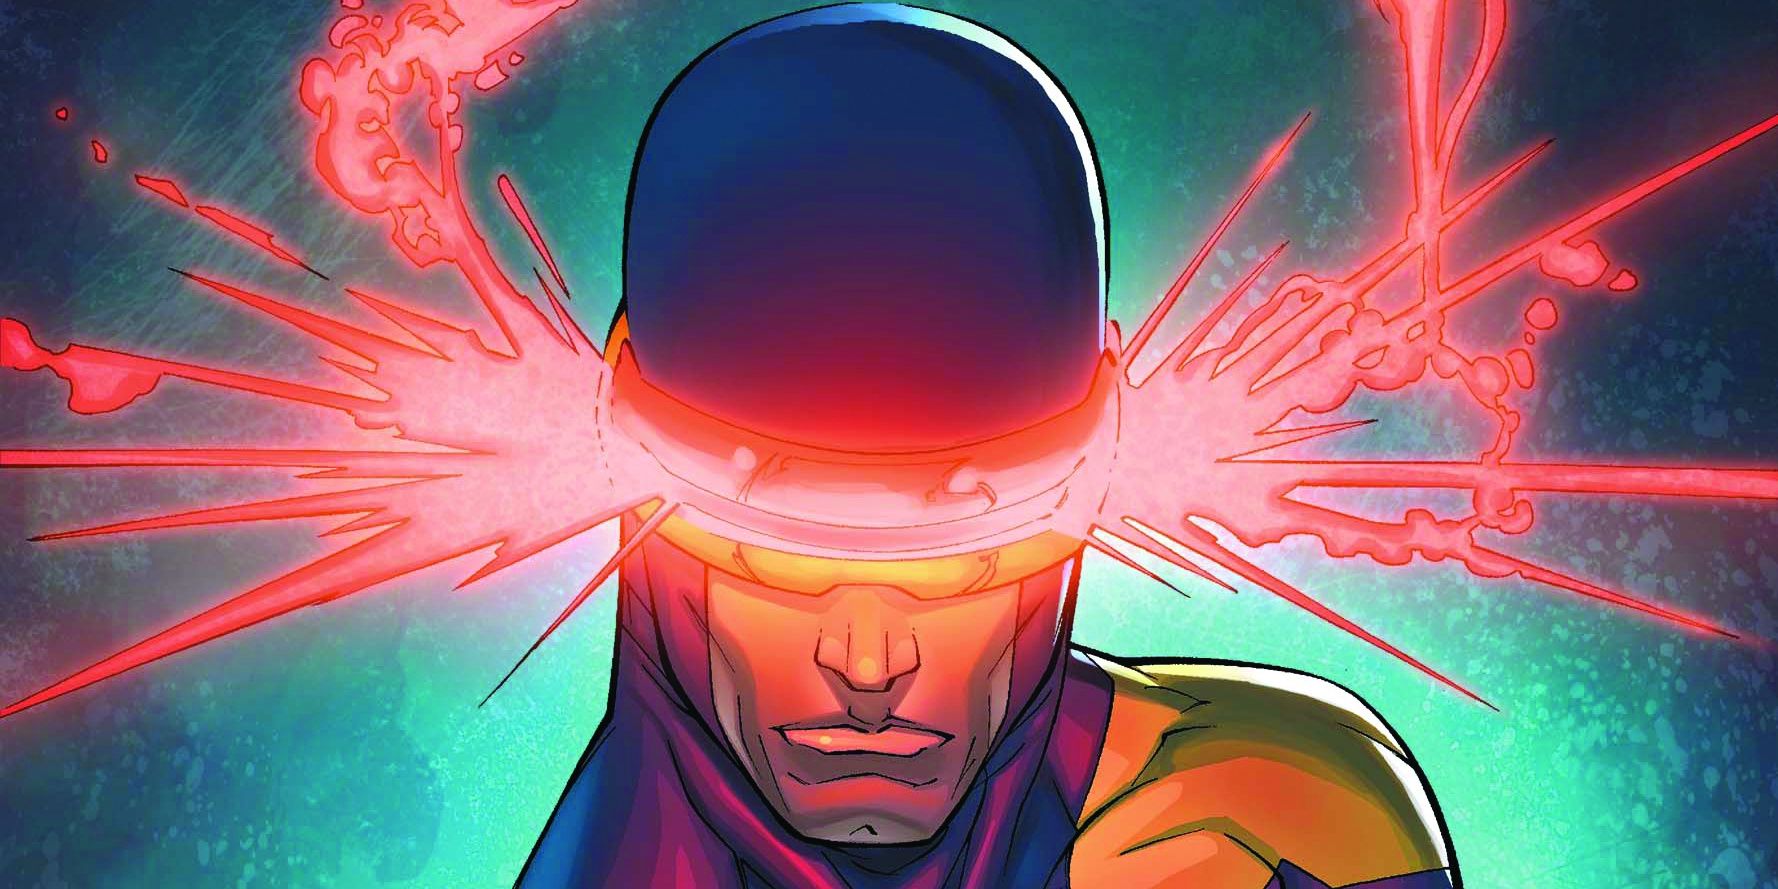 Cyclops #1 one-shot cover by Roger Cruz